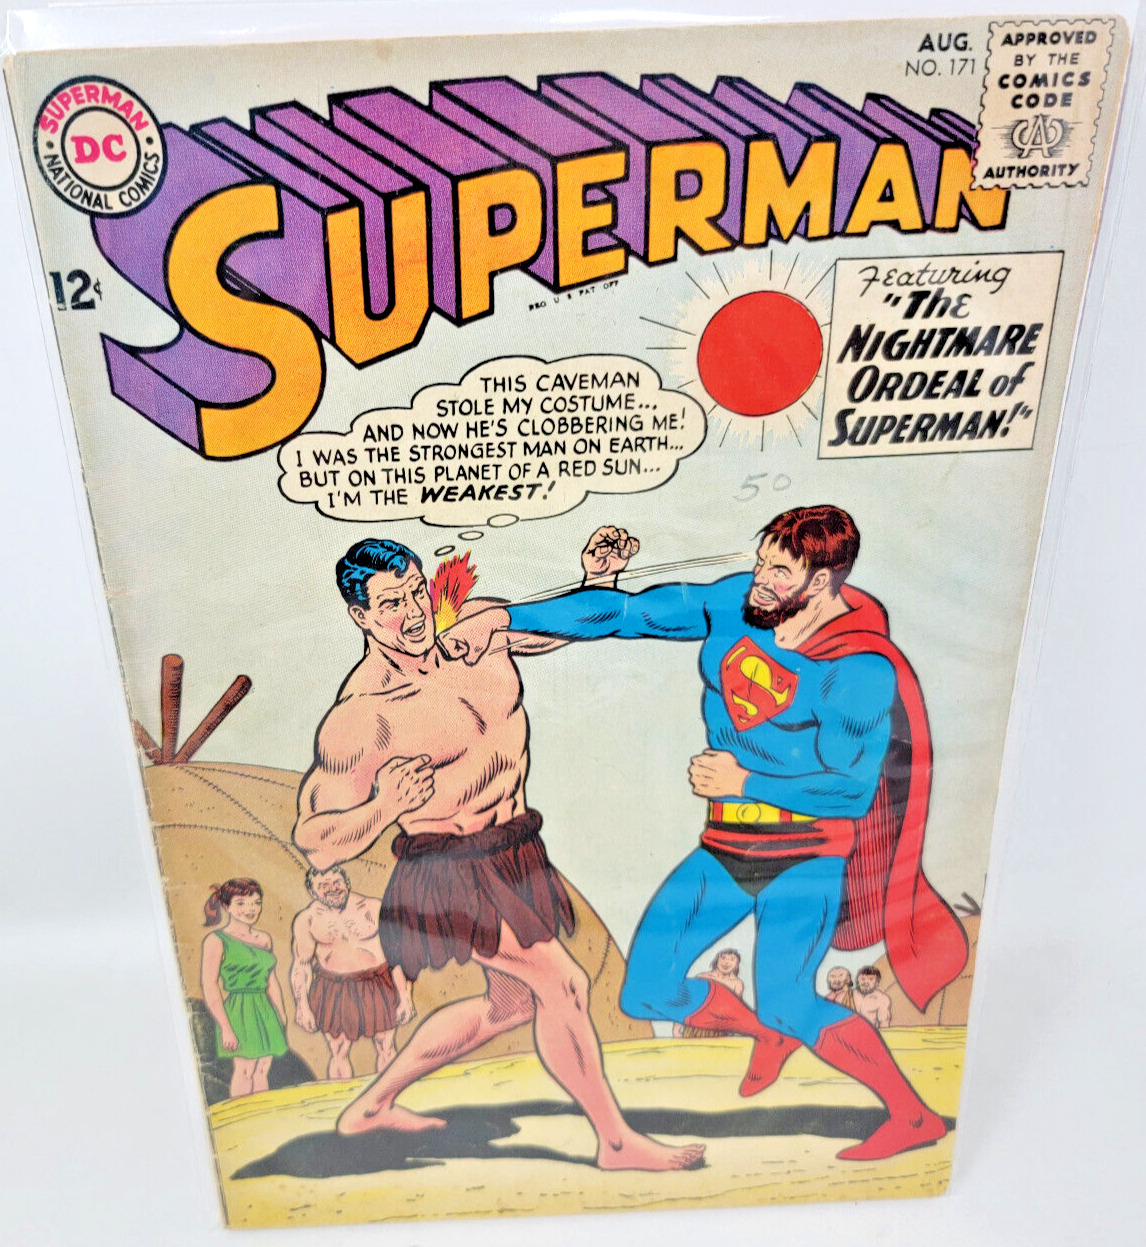 SUPERMAN #171 DC SILVER AGE CURT SWAN COVER ART *1964* 5.0